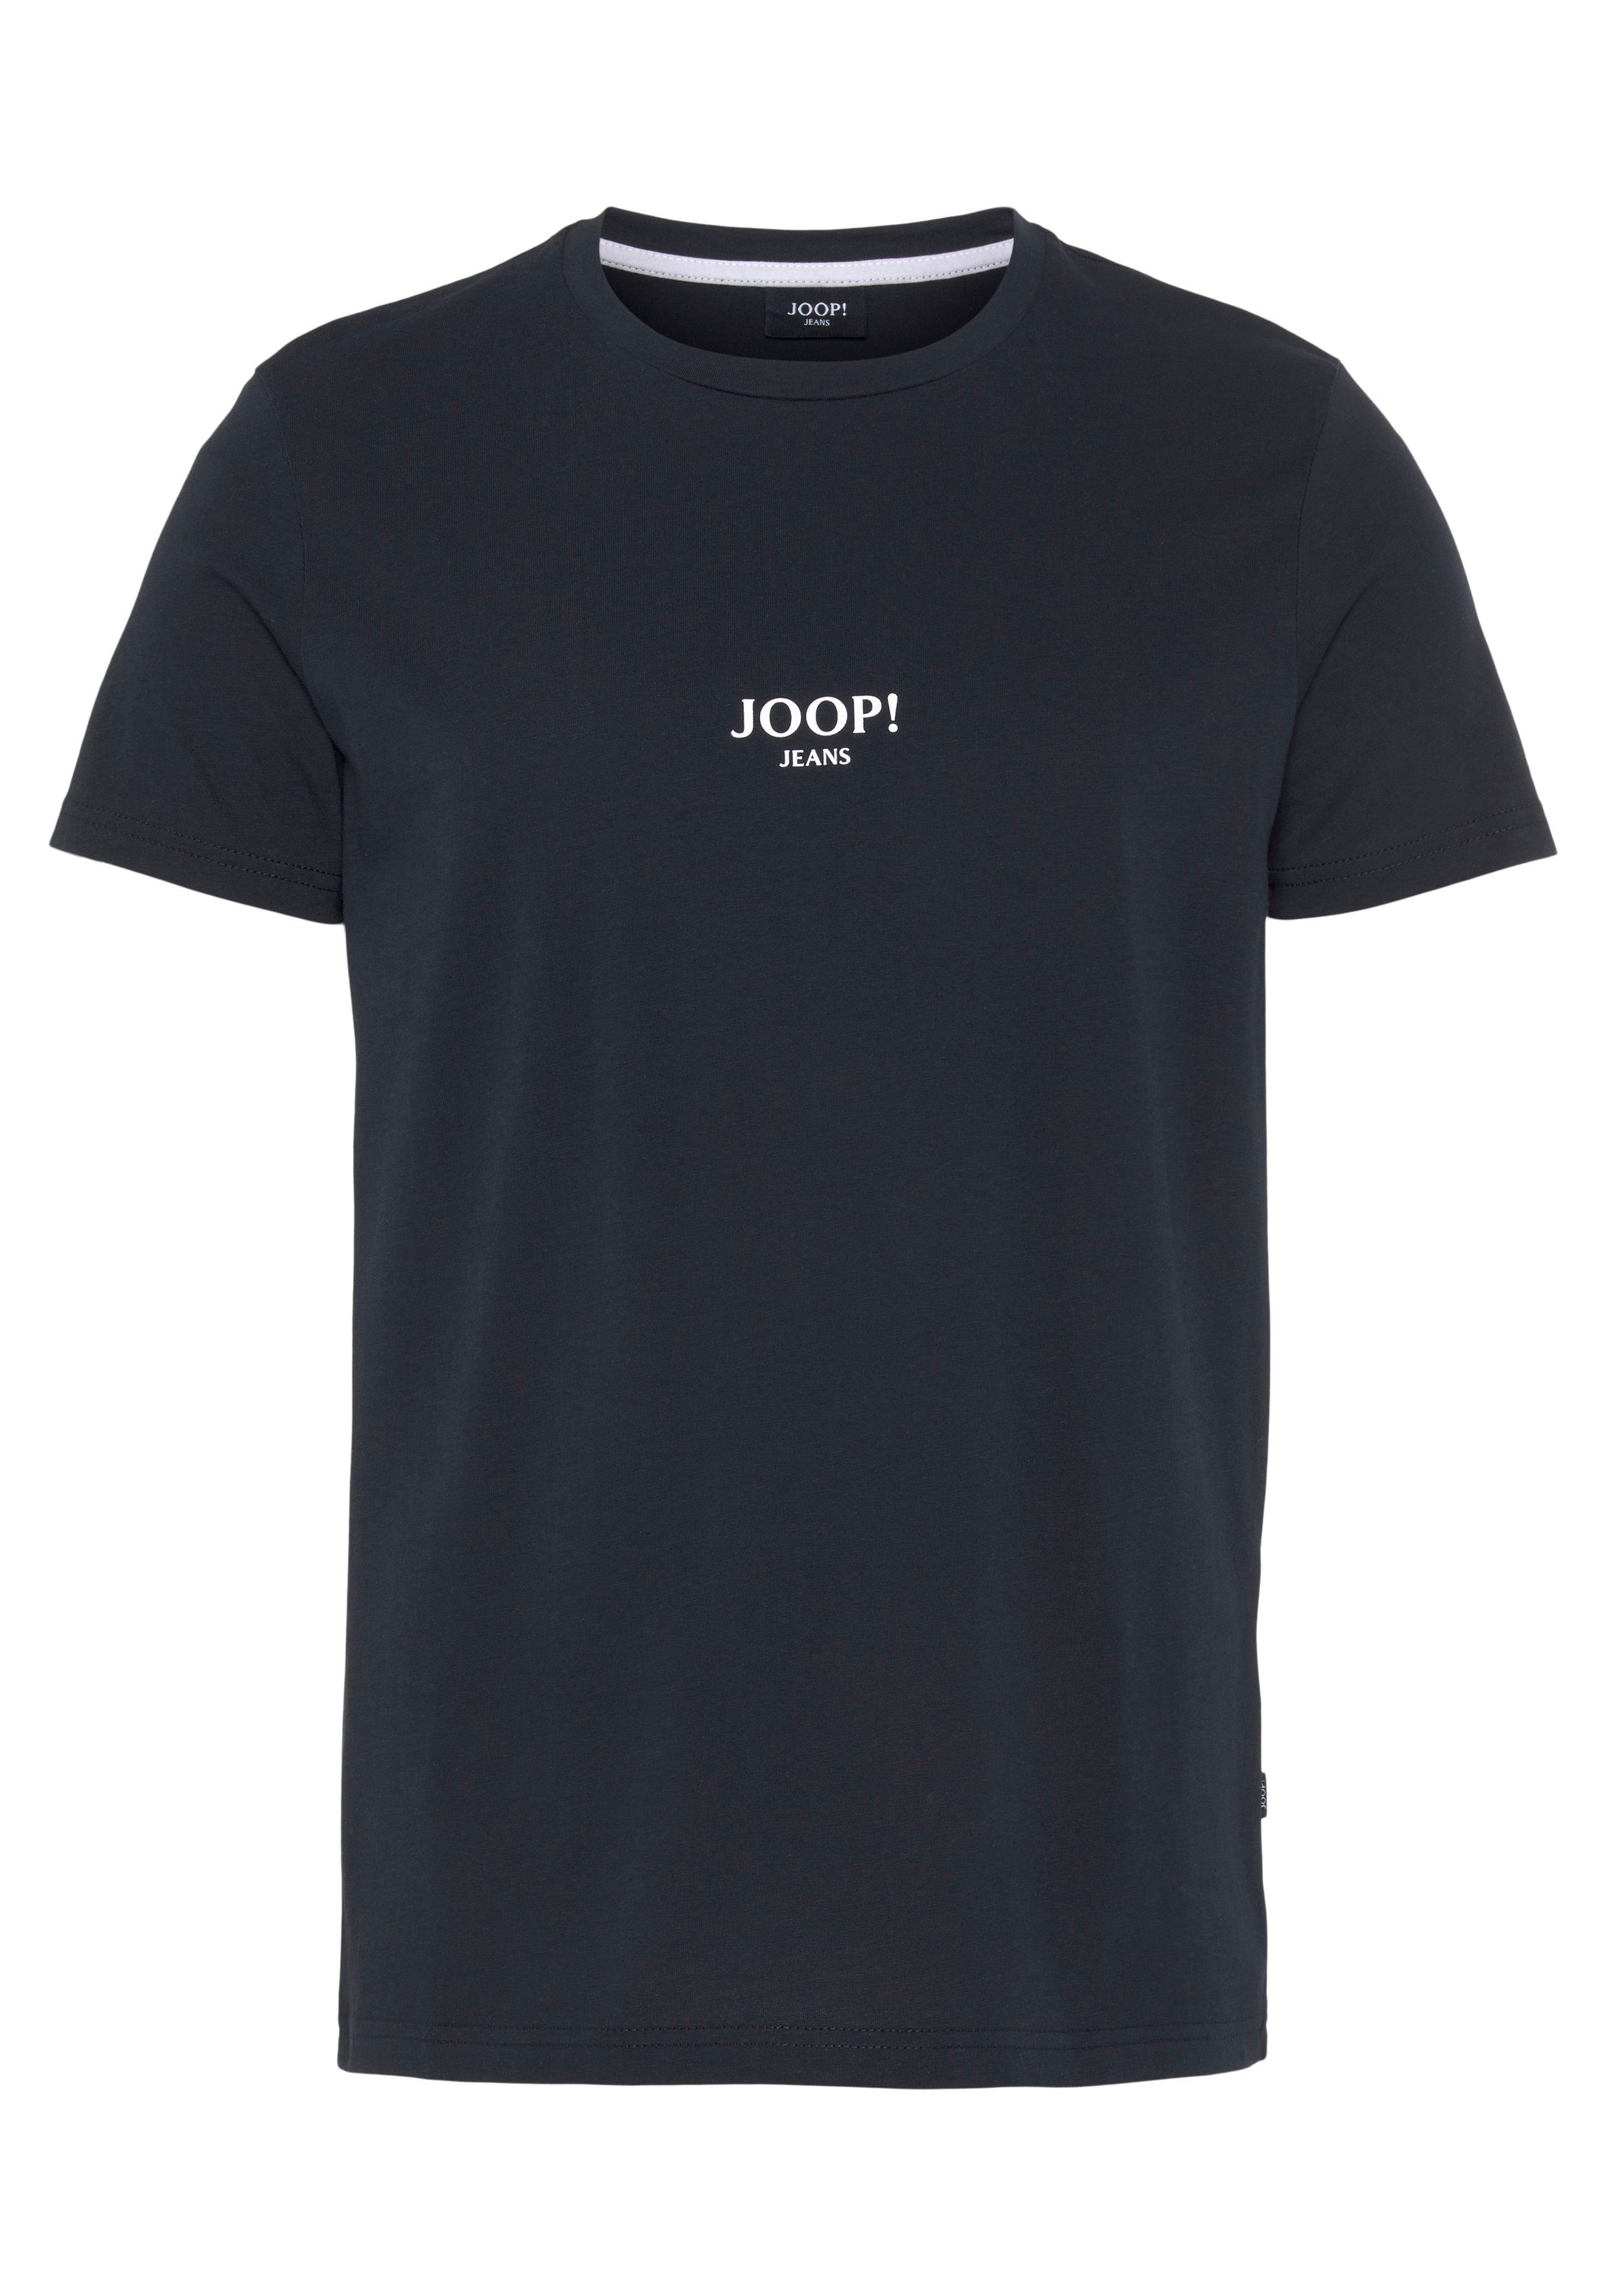 Logodruck Jeans marine mit T-Shirt Joop